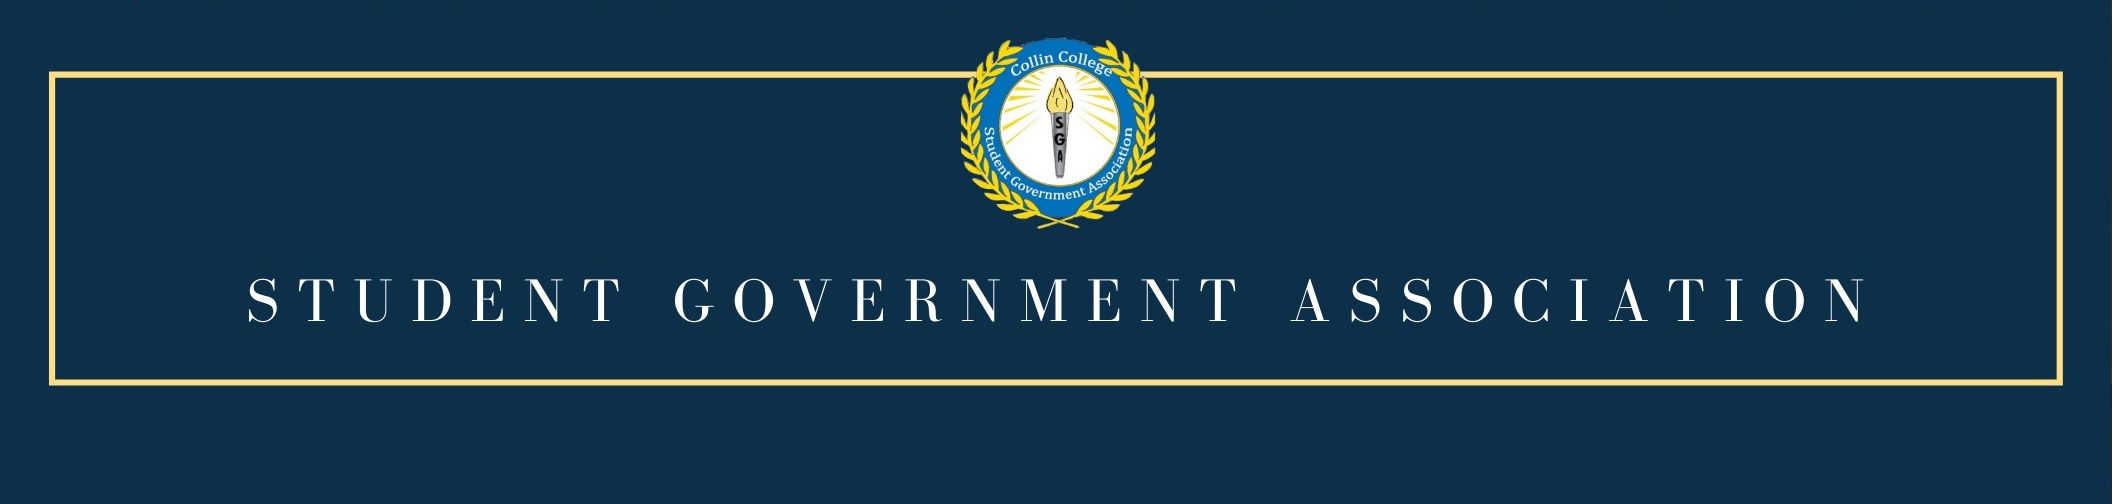 student government association banner